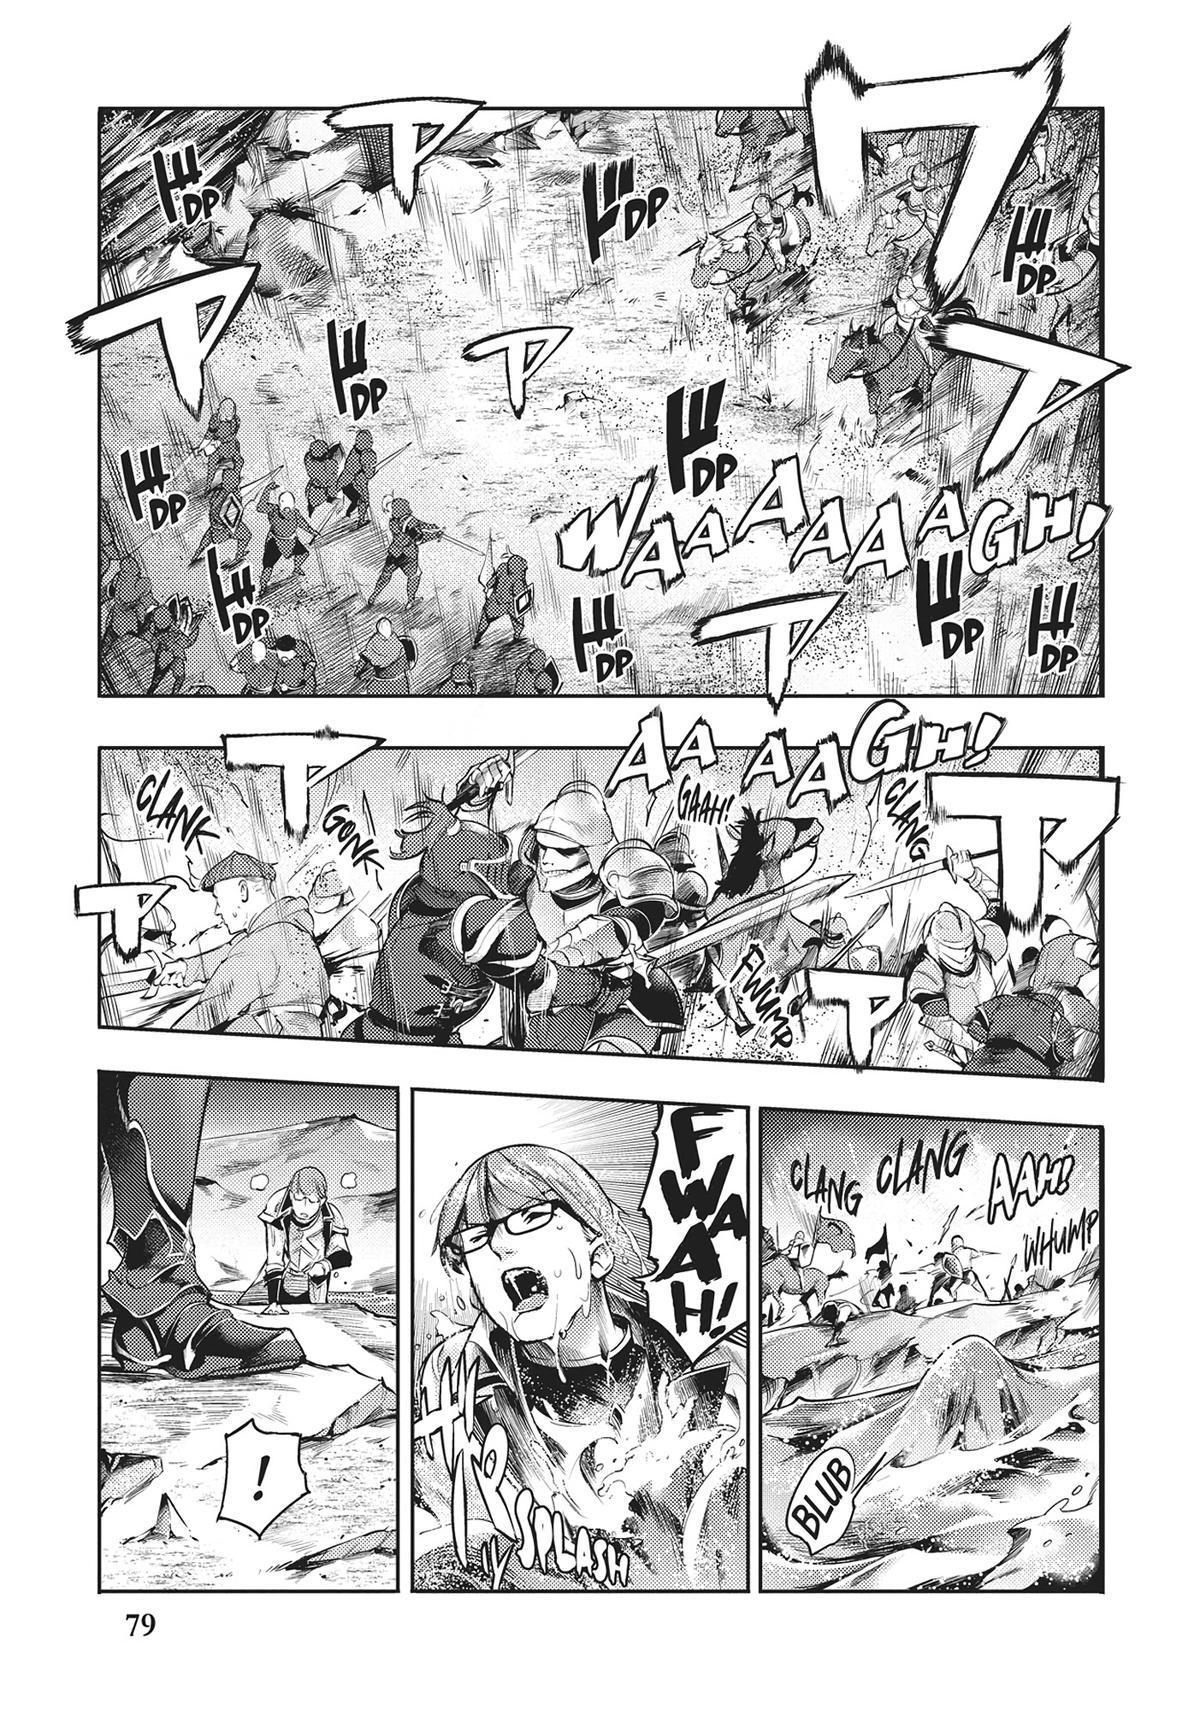 World's End Harem - Fantasia Vol.3 Ch.12.1 Page 6 - Mangago